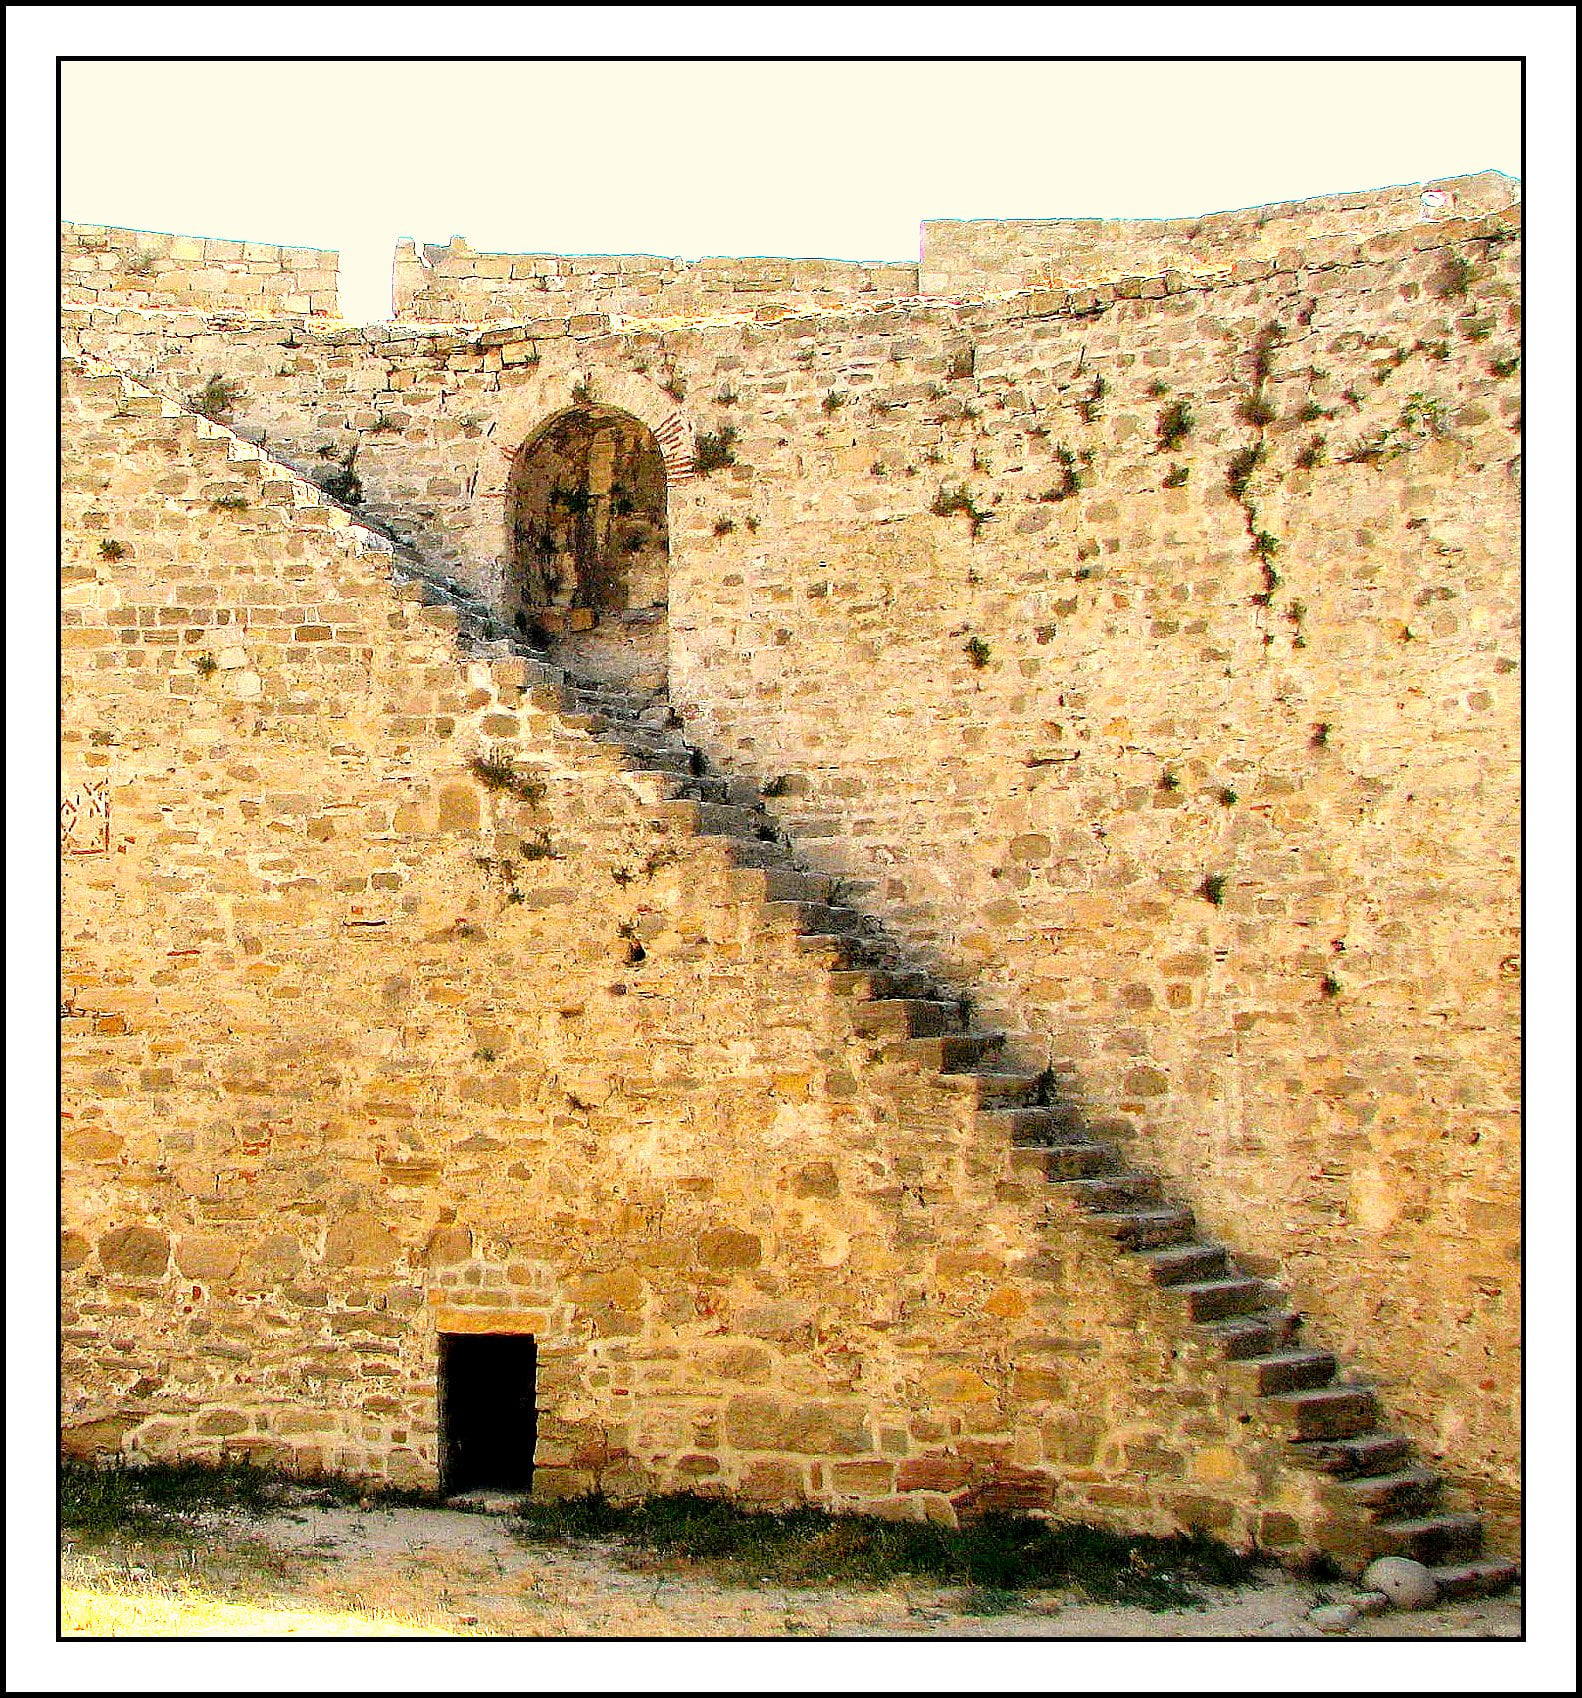 Kilitbahir Castle